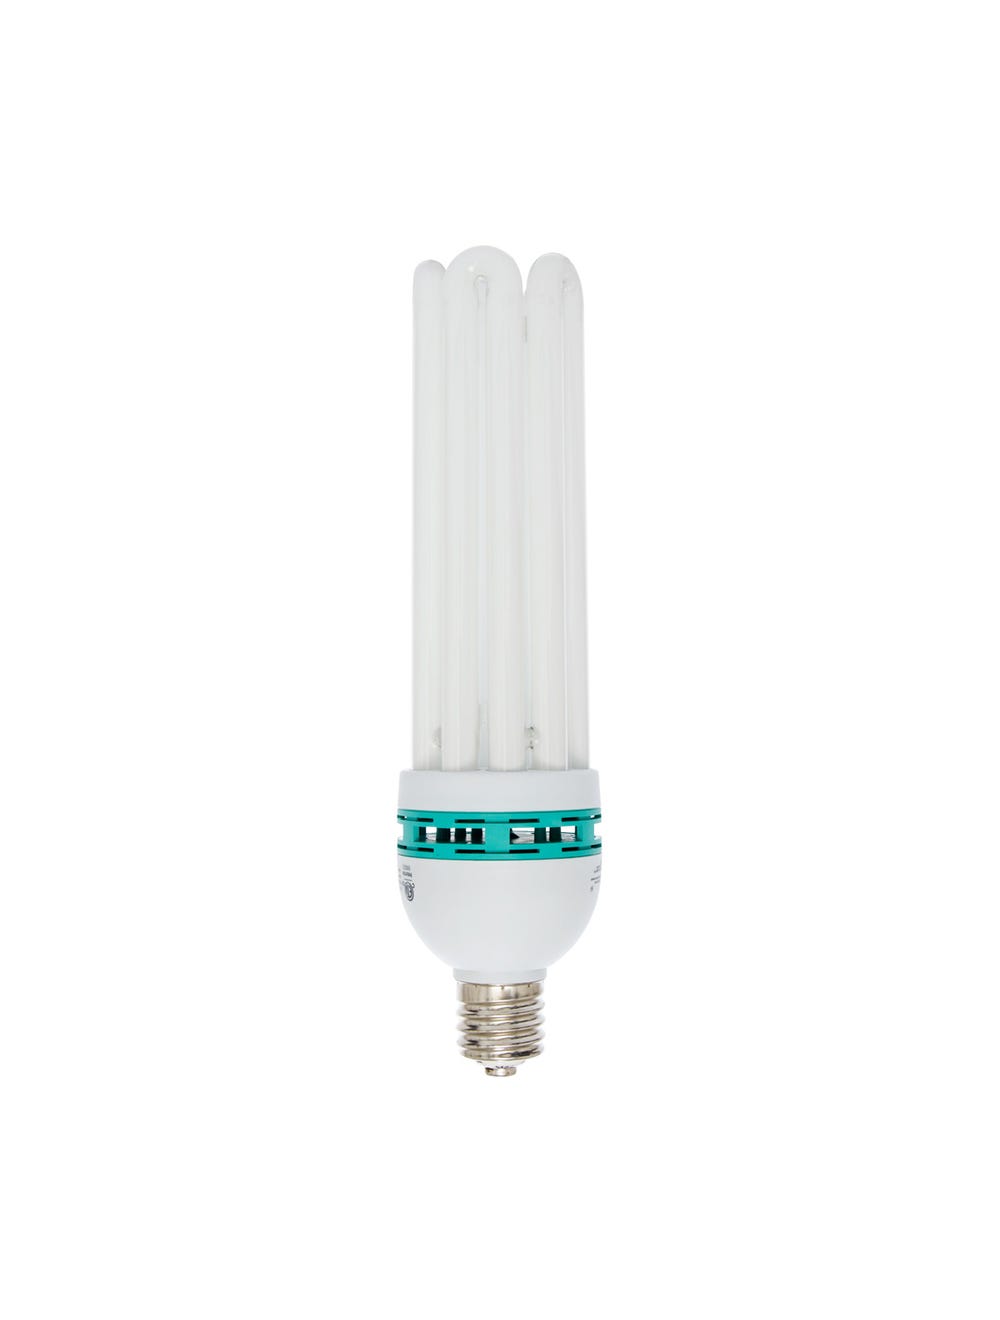 stress støn Ed Agrobrite Compact Fluorescent Lamp, Cool, 125W, 6500K